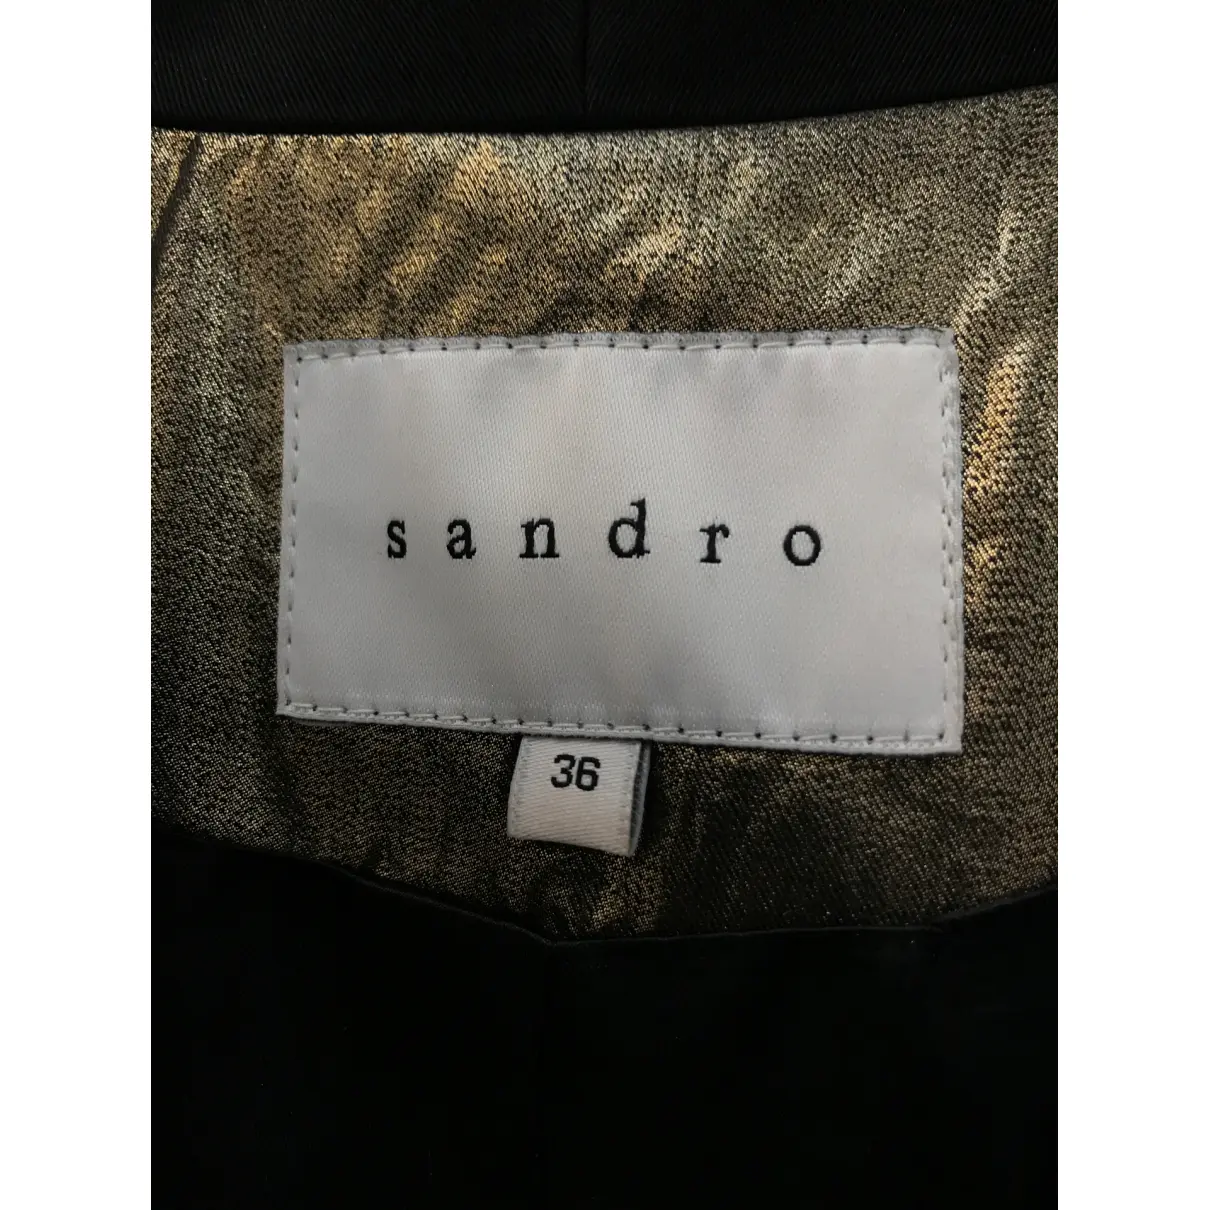 Buy Sandro Fall Winter 2019 short vest online